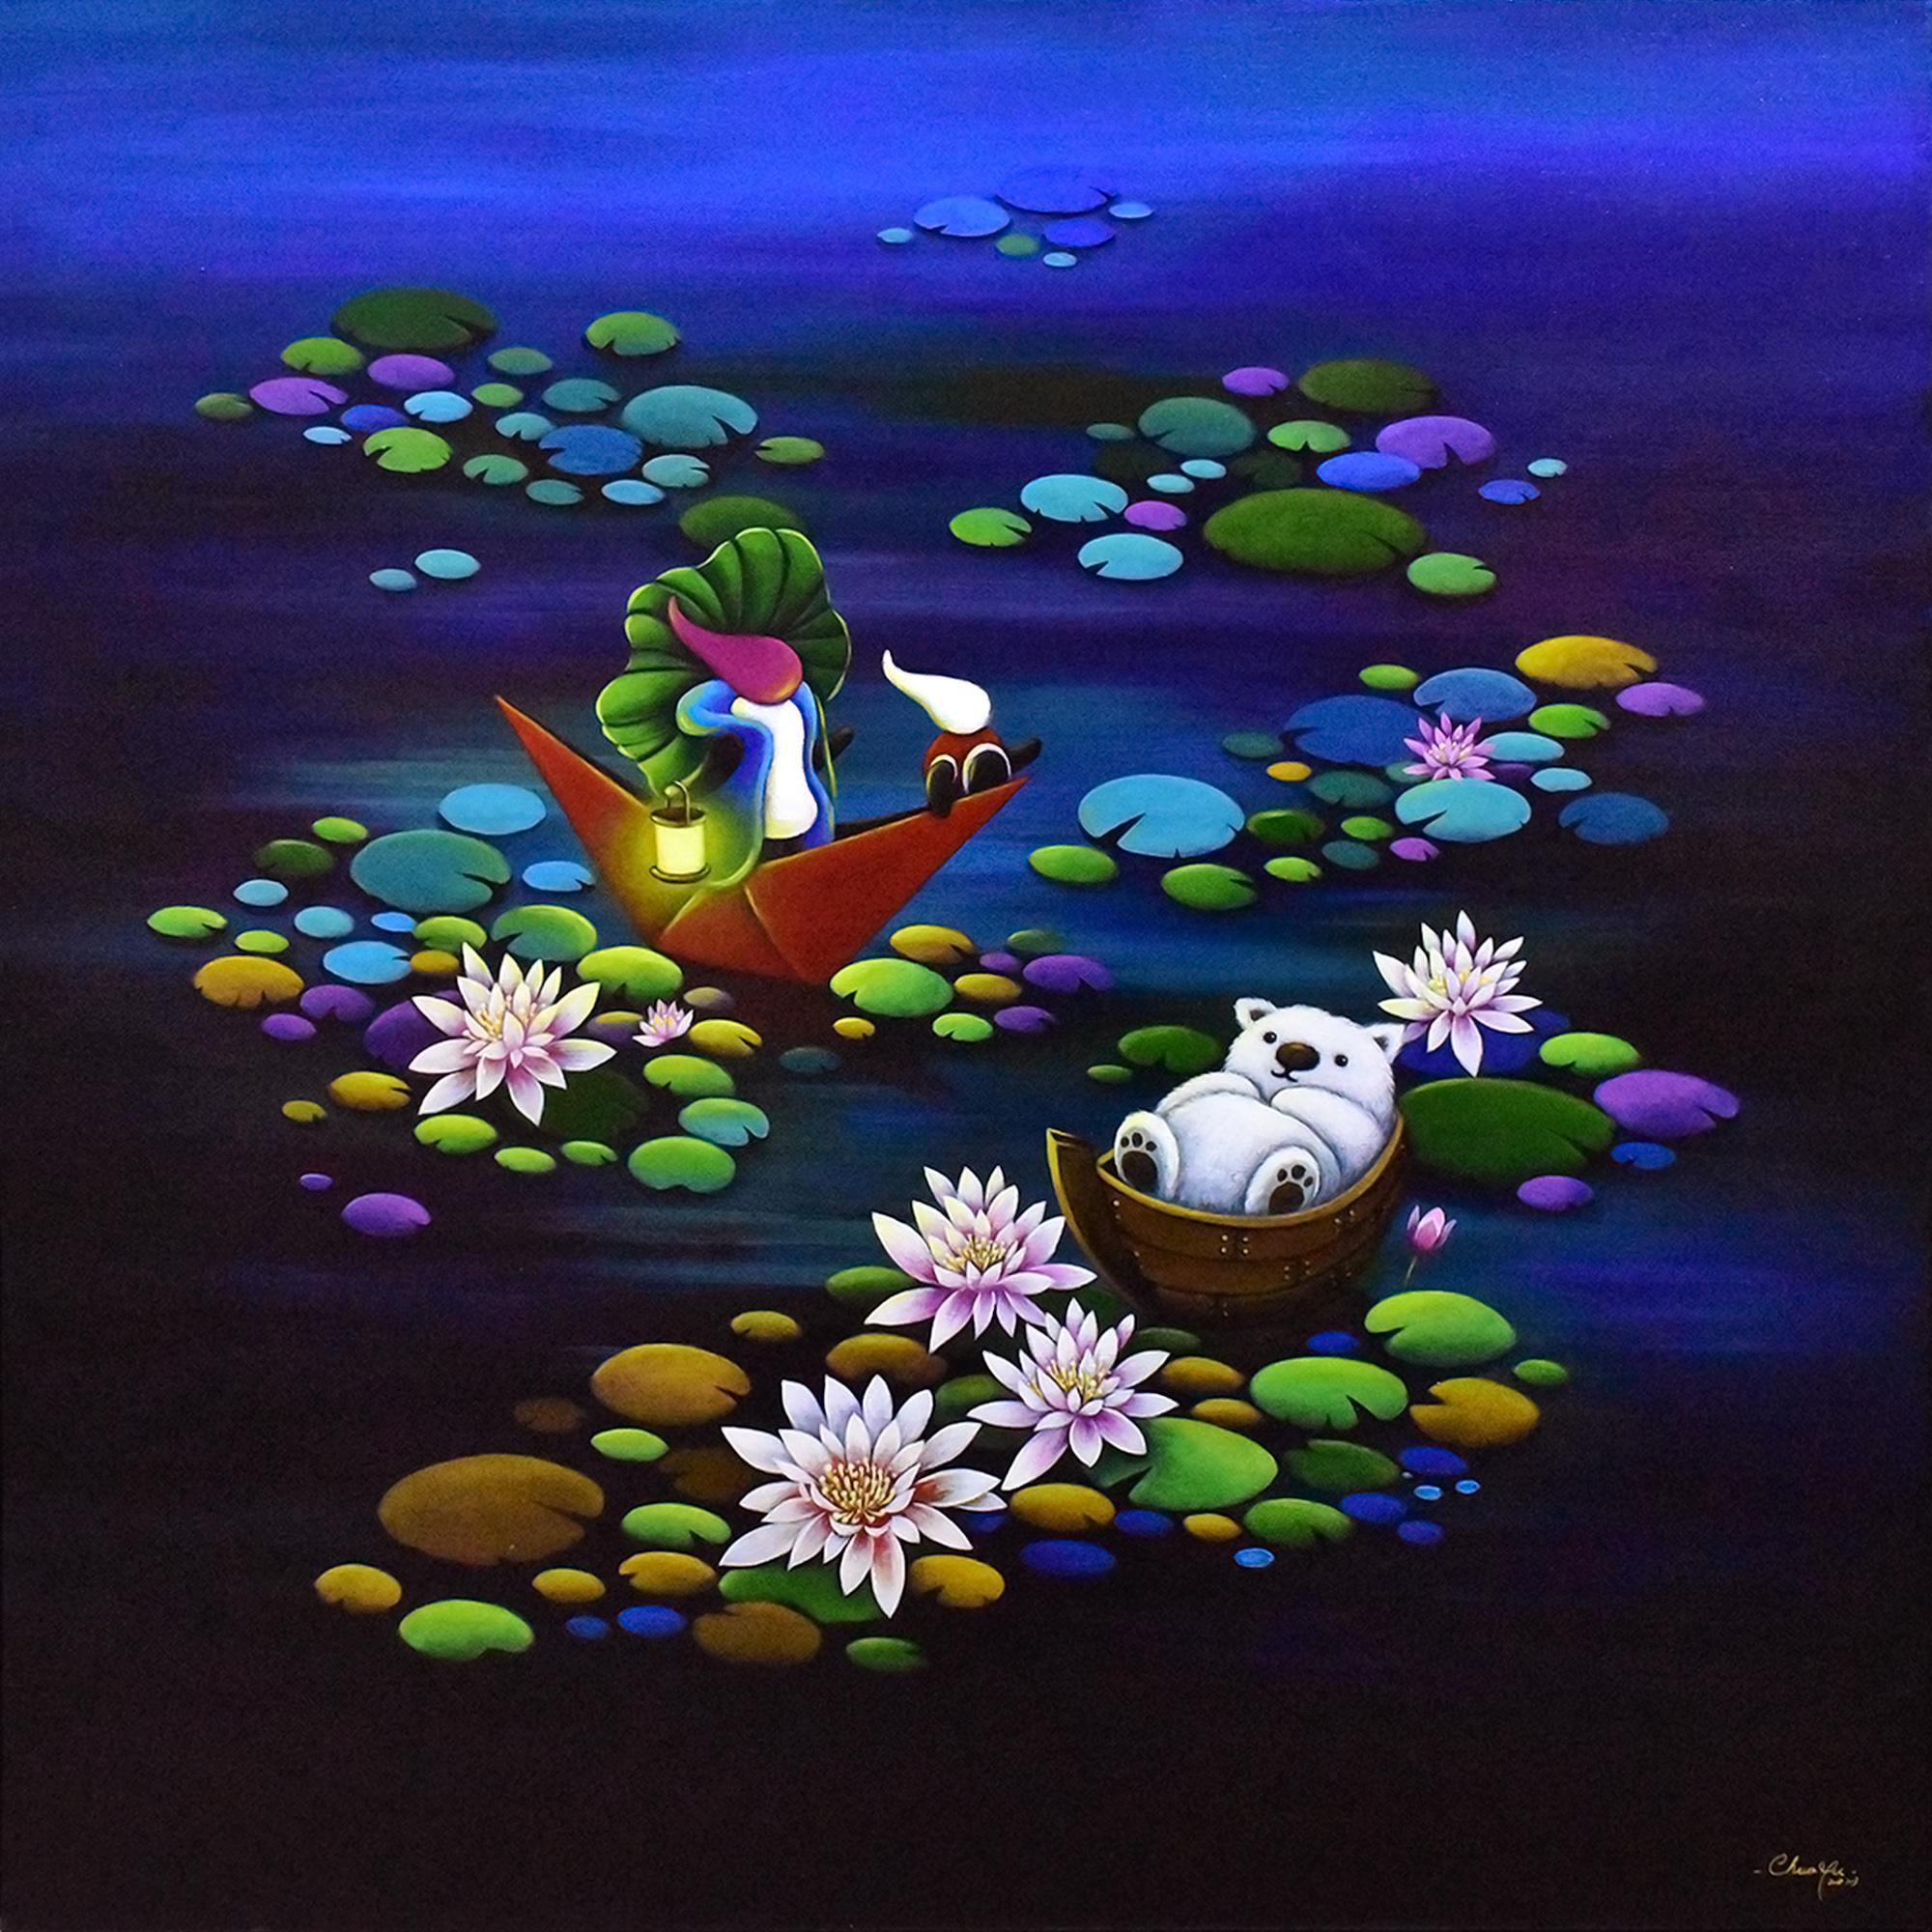 Colourful Life - Painting by Chun Yu